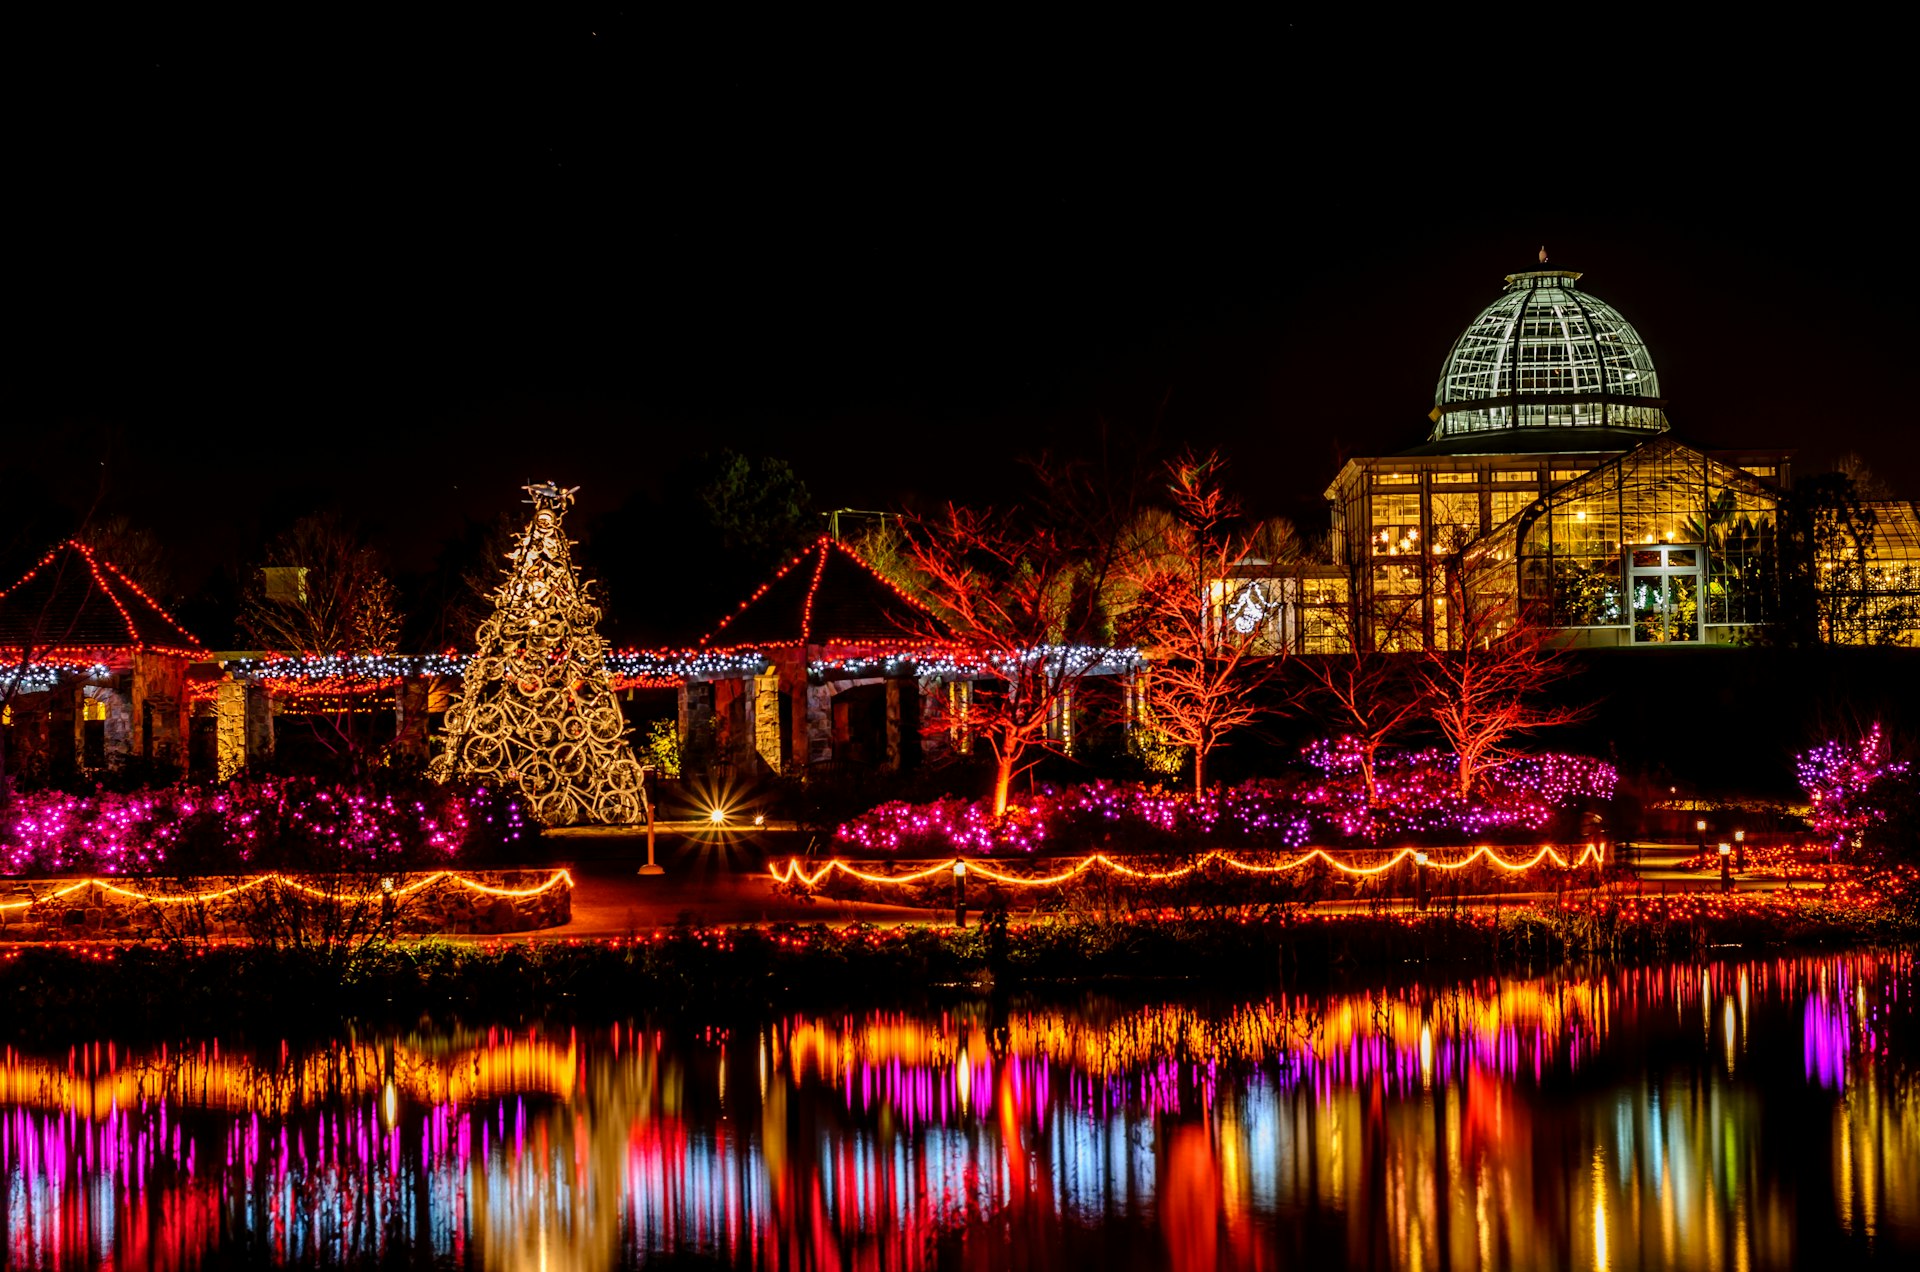 GardenFest of Lights at Lewis Ginter Botanical Gardens in Richmond, Virginia